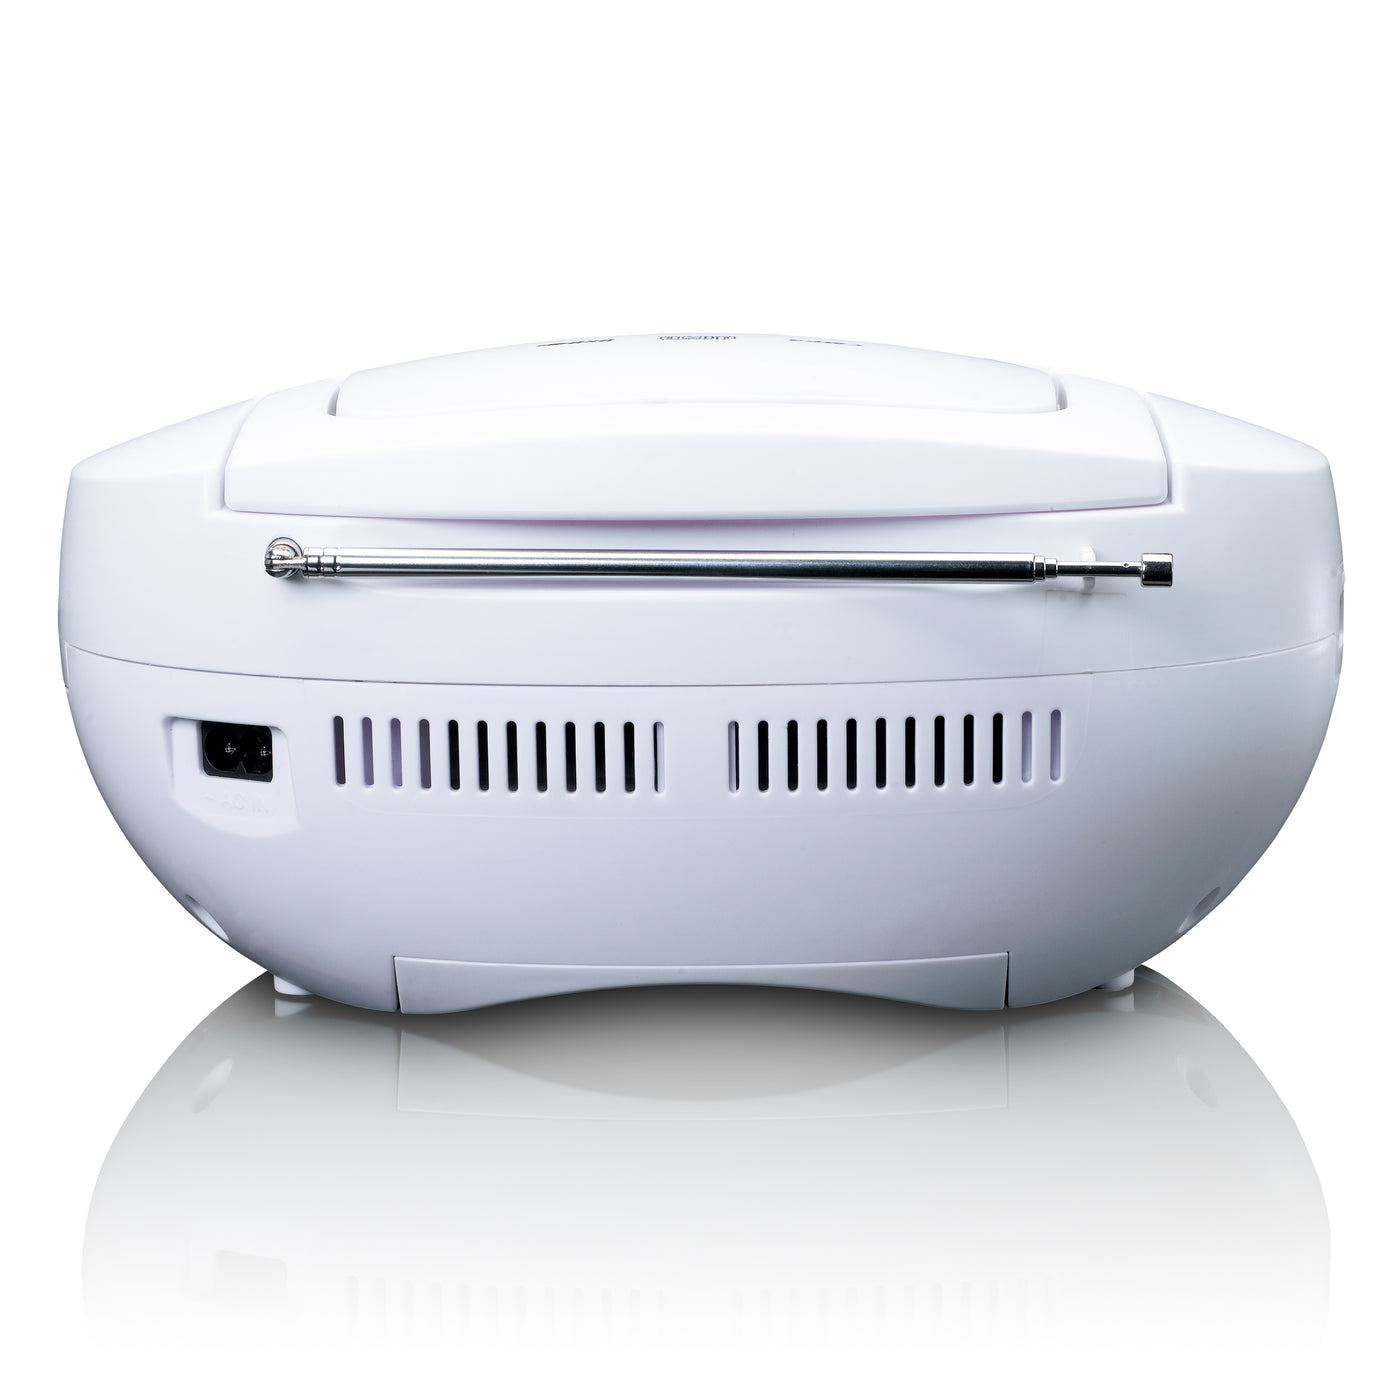 LENCO SCD-301BU - Portable FM Radio/CD/MP3 and USB player - Blue